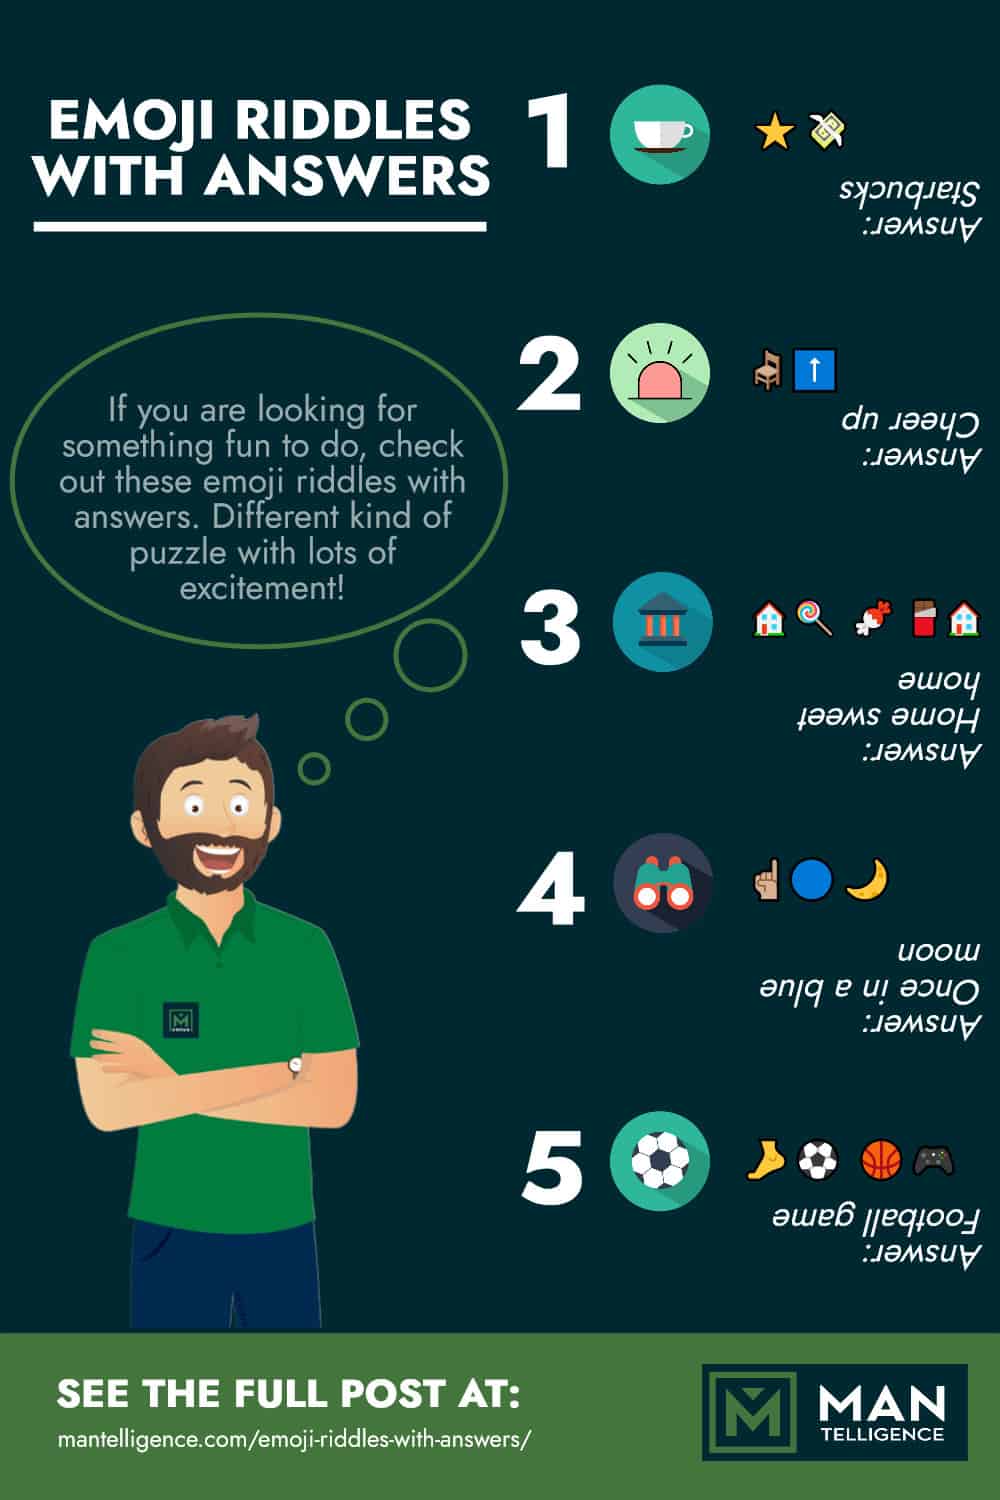 Infographic - Emoji rejtvények válaszokkal